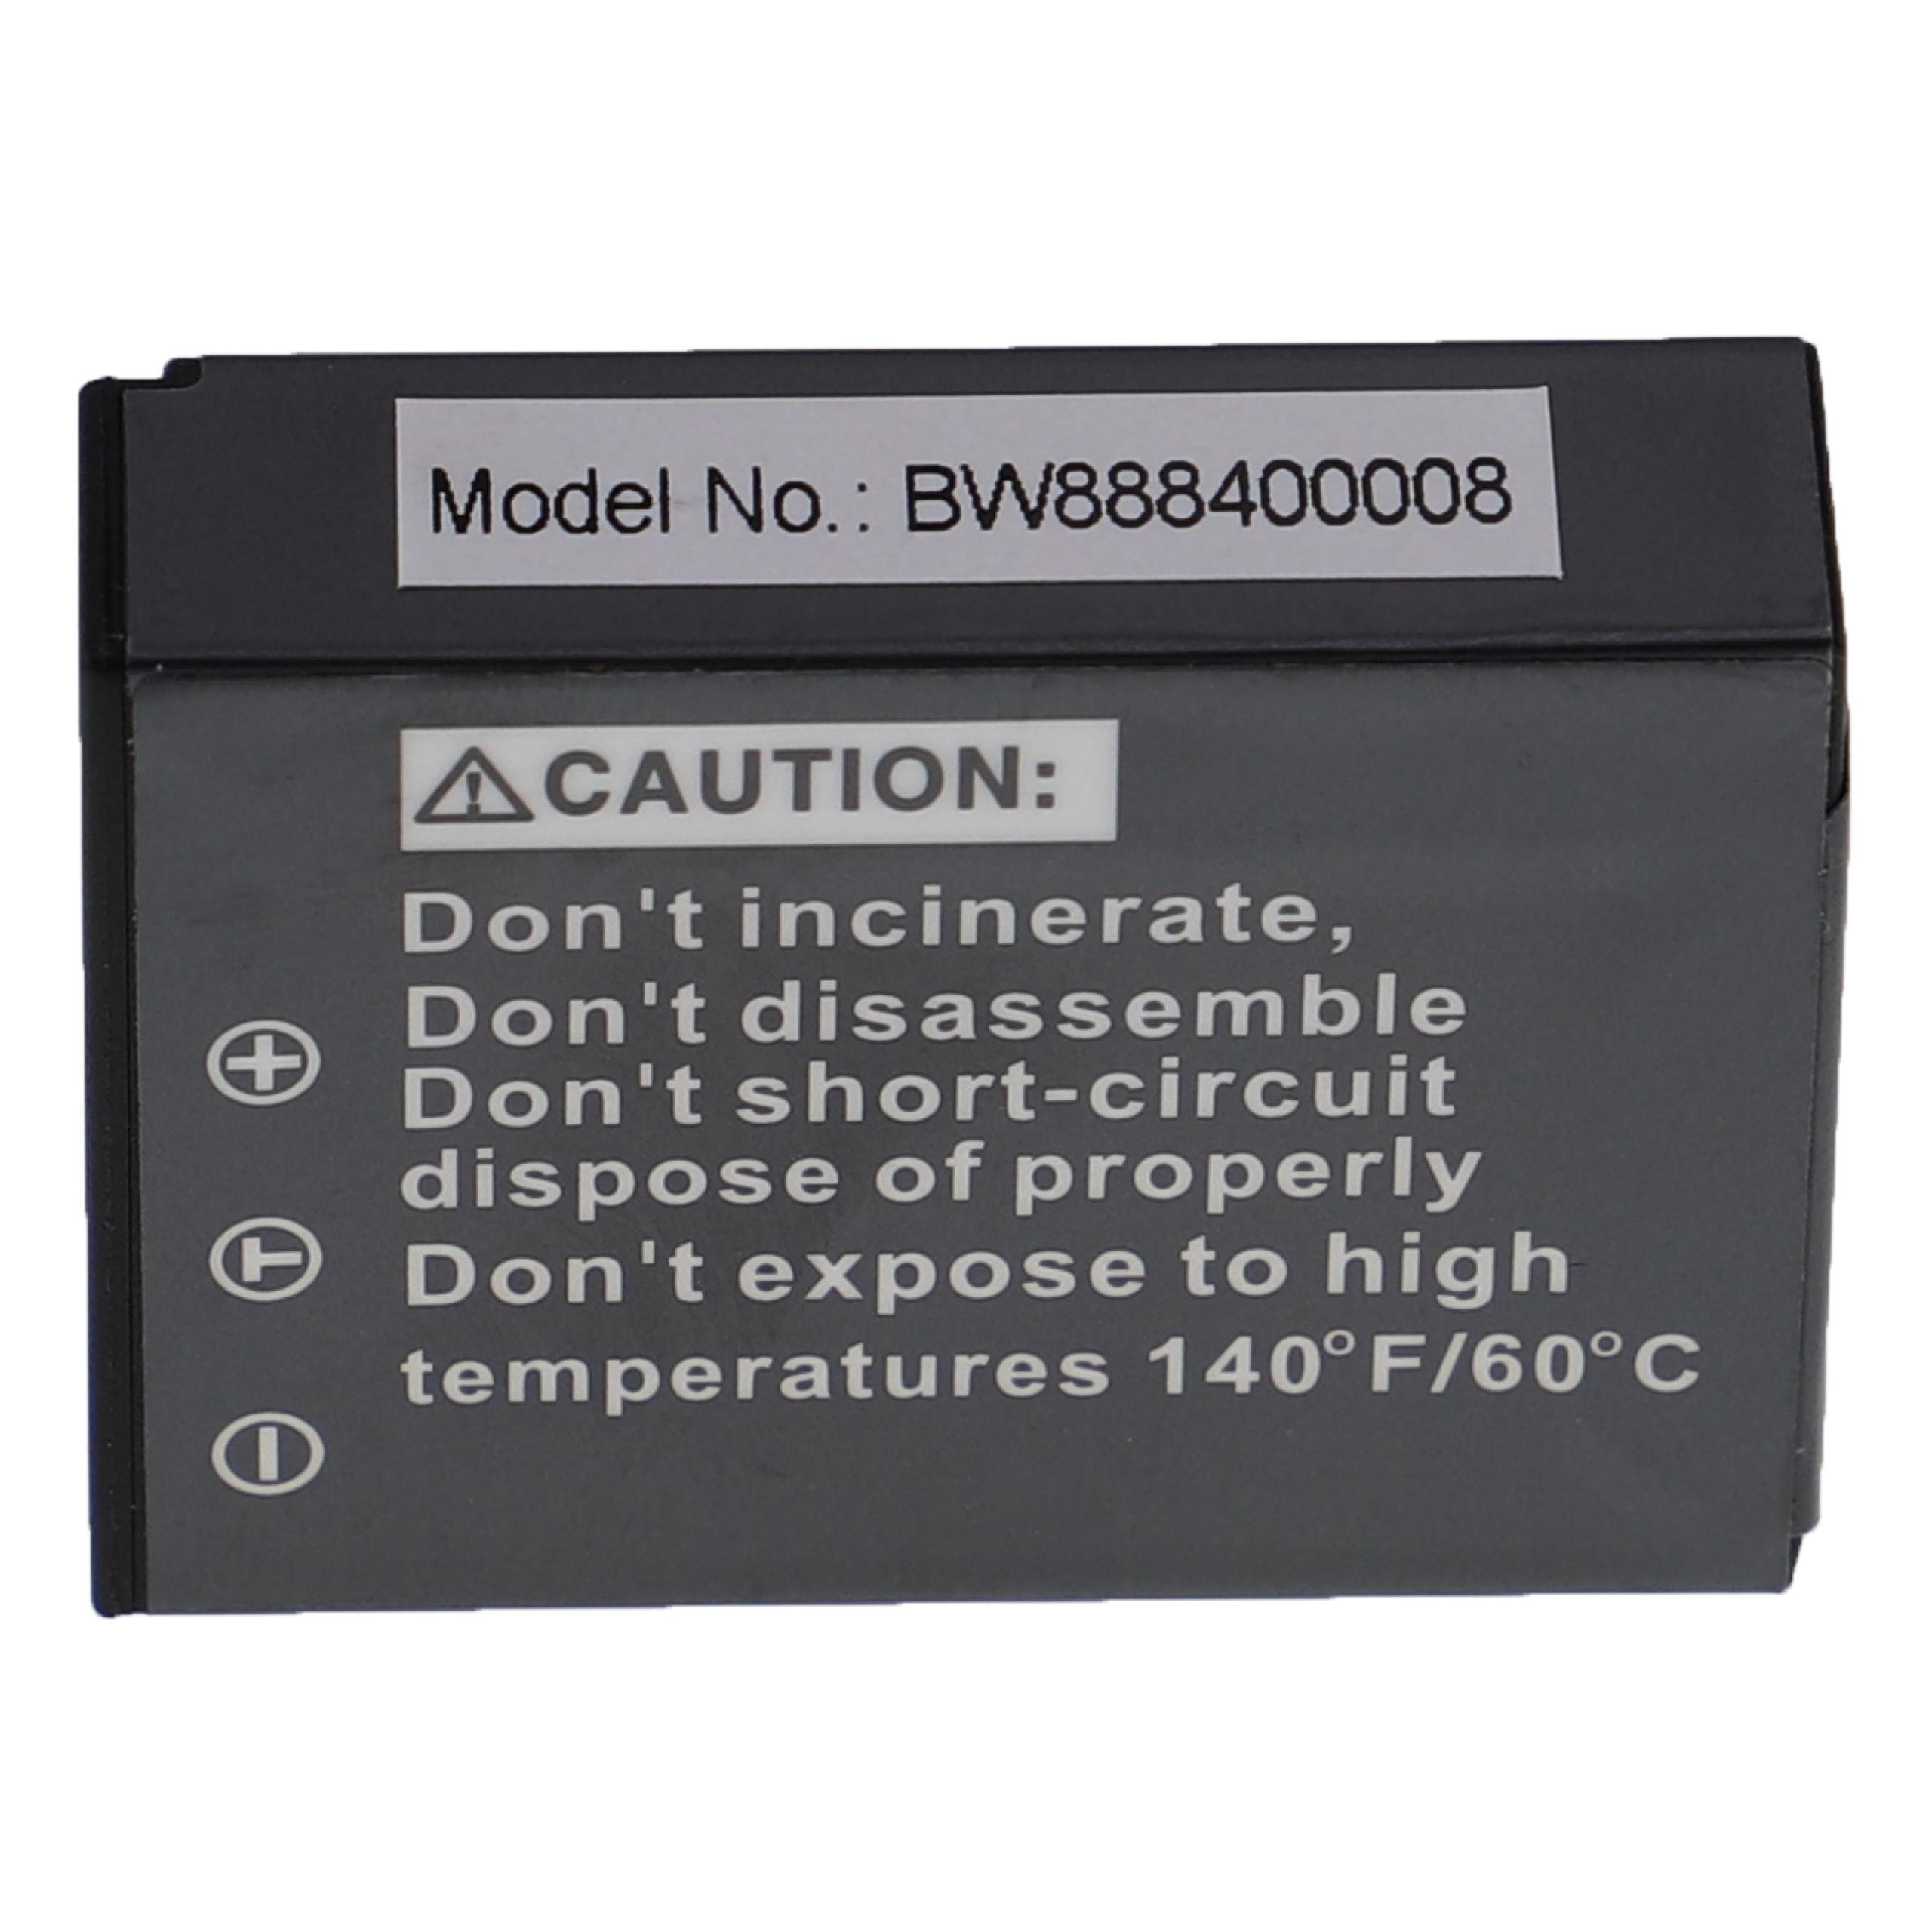 Akumulator do aparatu cyfrowego zamiennik Aiptek NP170, CB170, 084-07042L-062, CB-170 - 1600 mAh 3,6 V Li-Ion